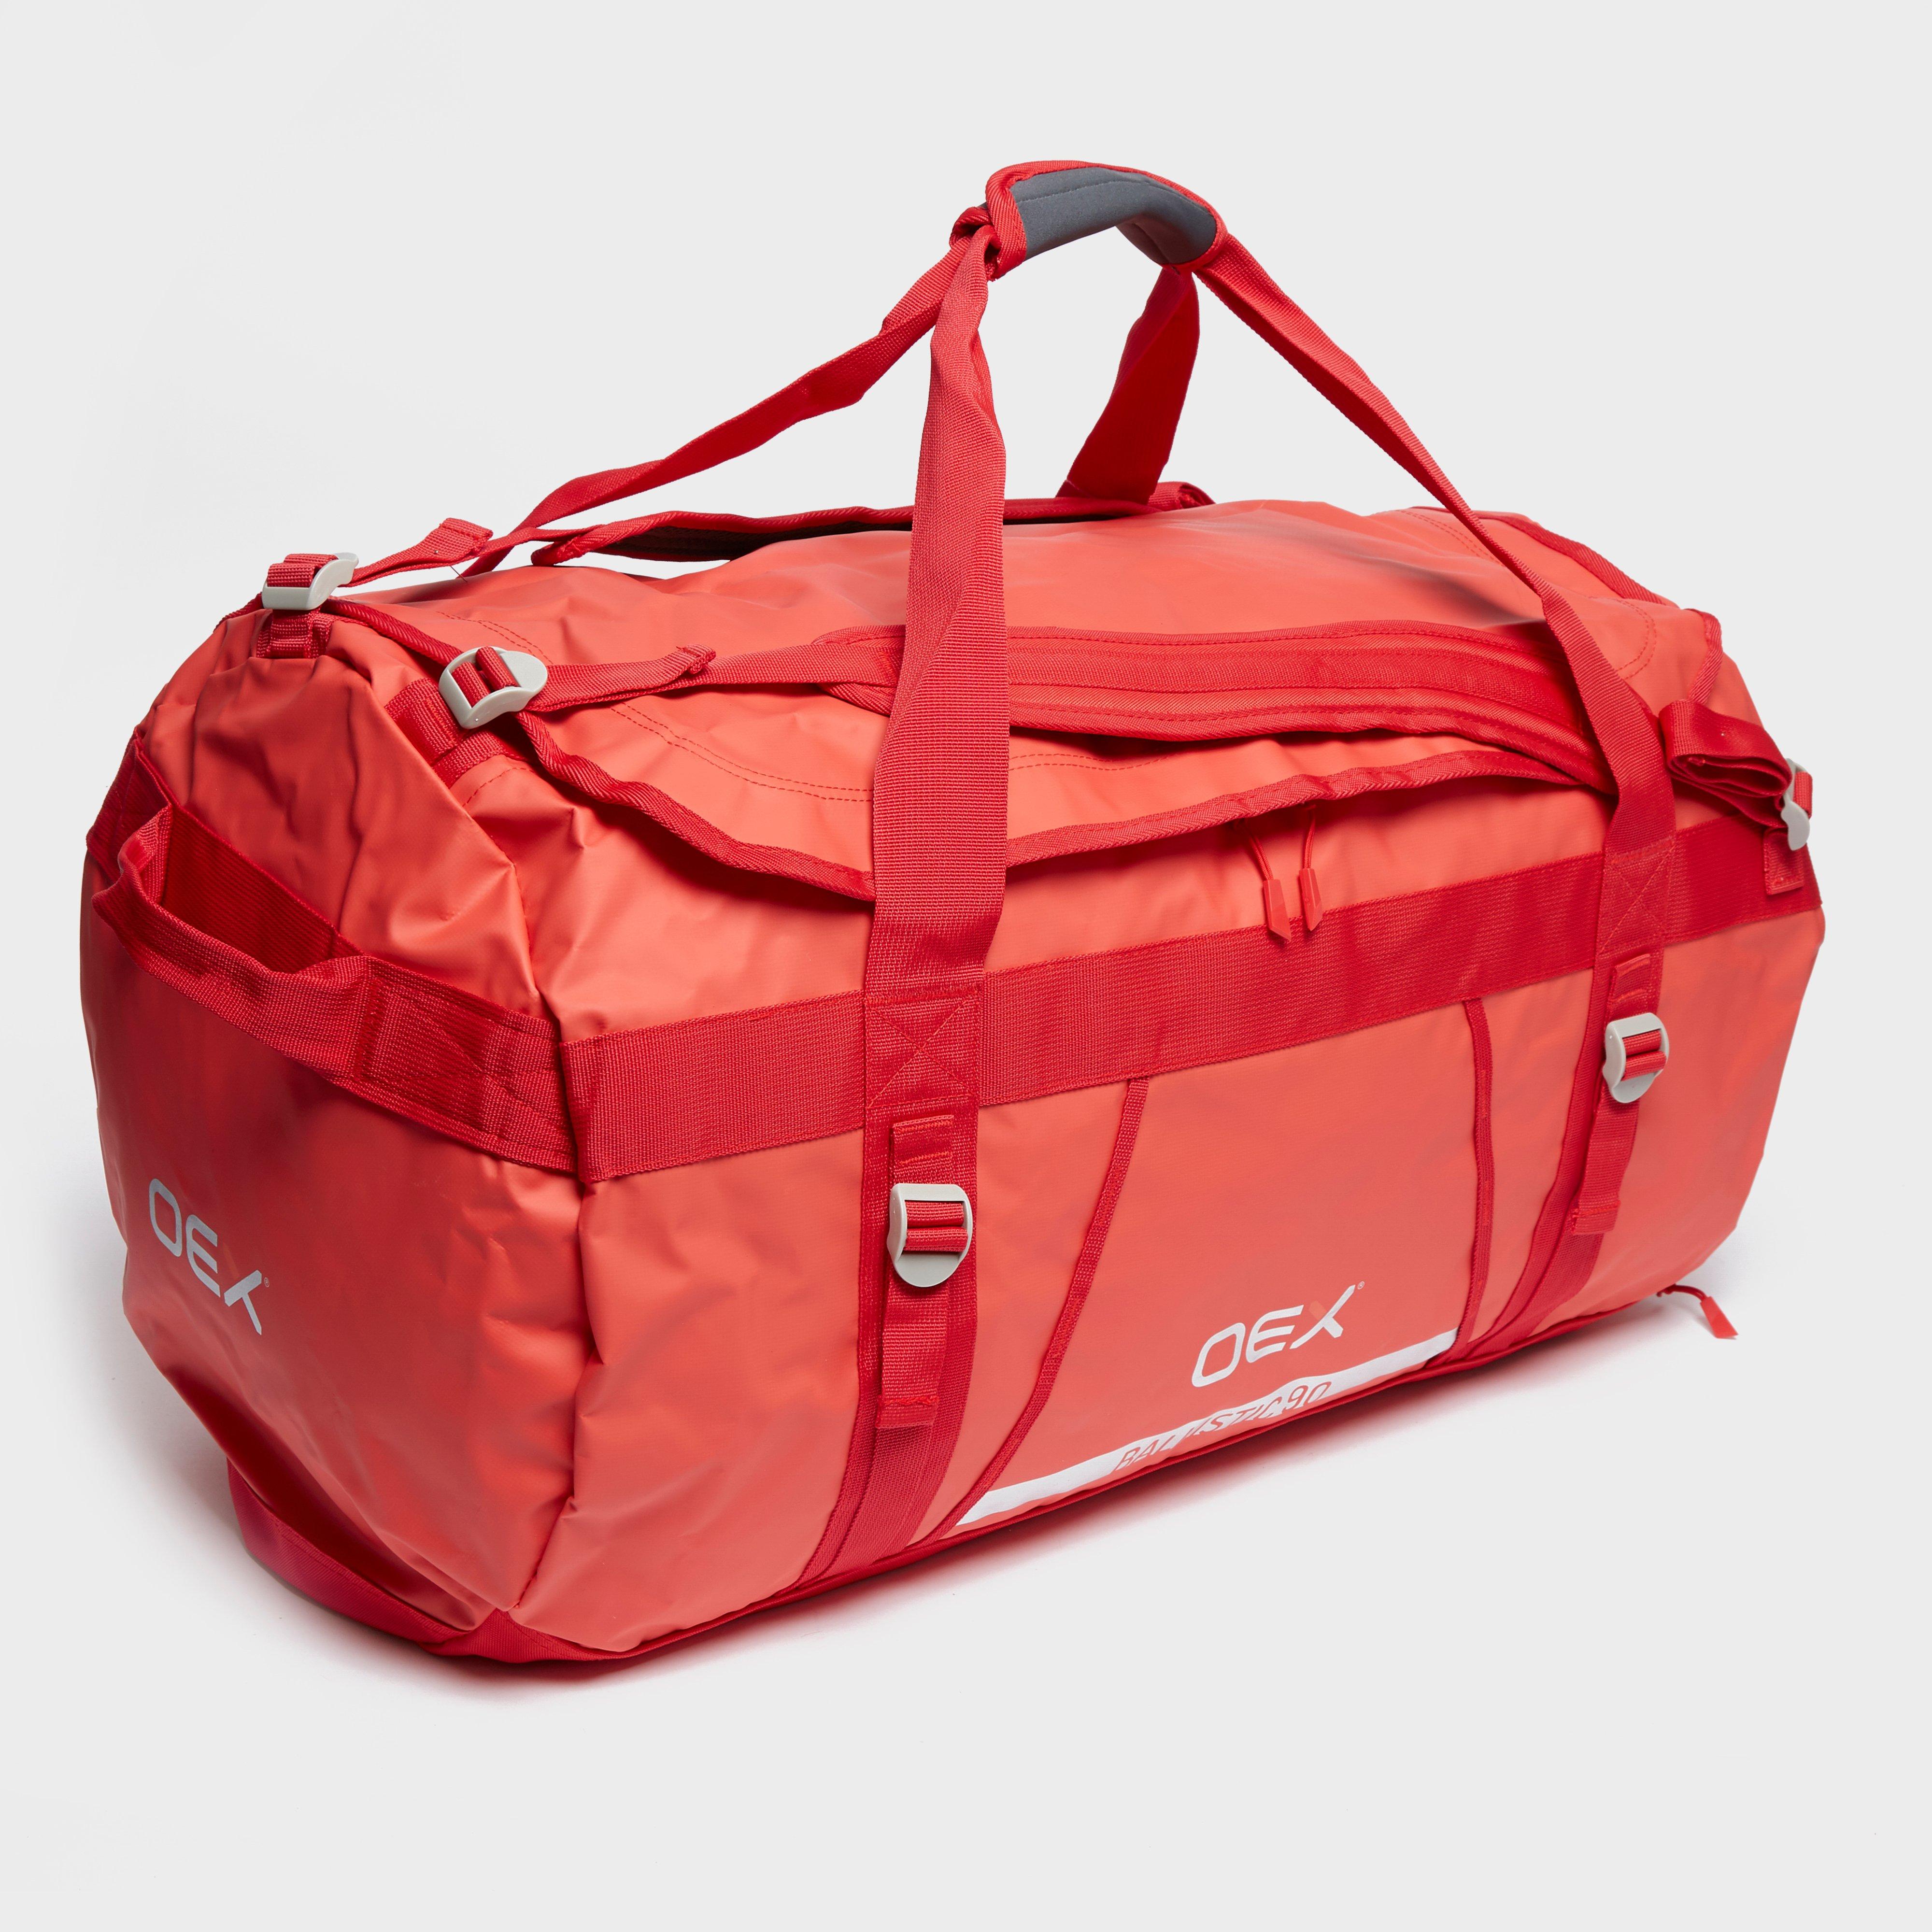 Oex Ballistic 90l Cargo Bag - Red/cargo  Red/cargo